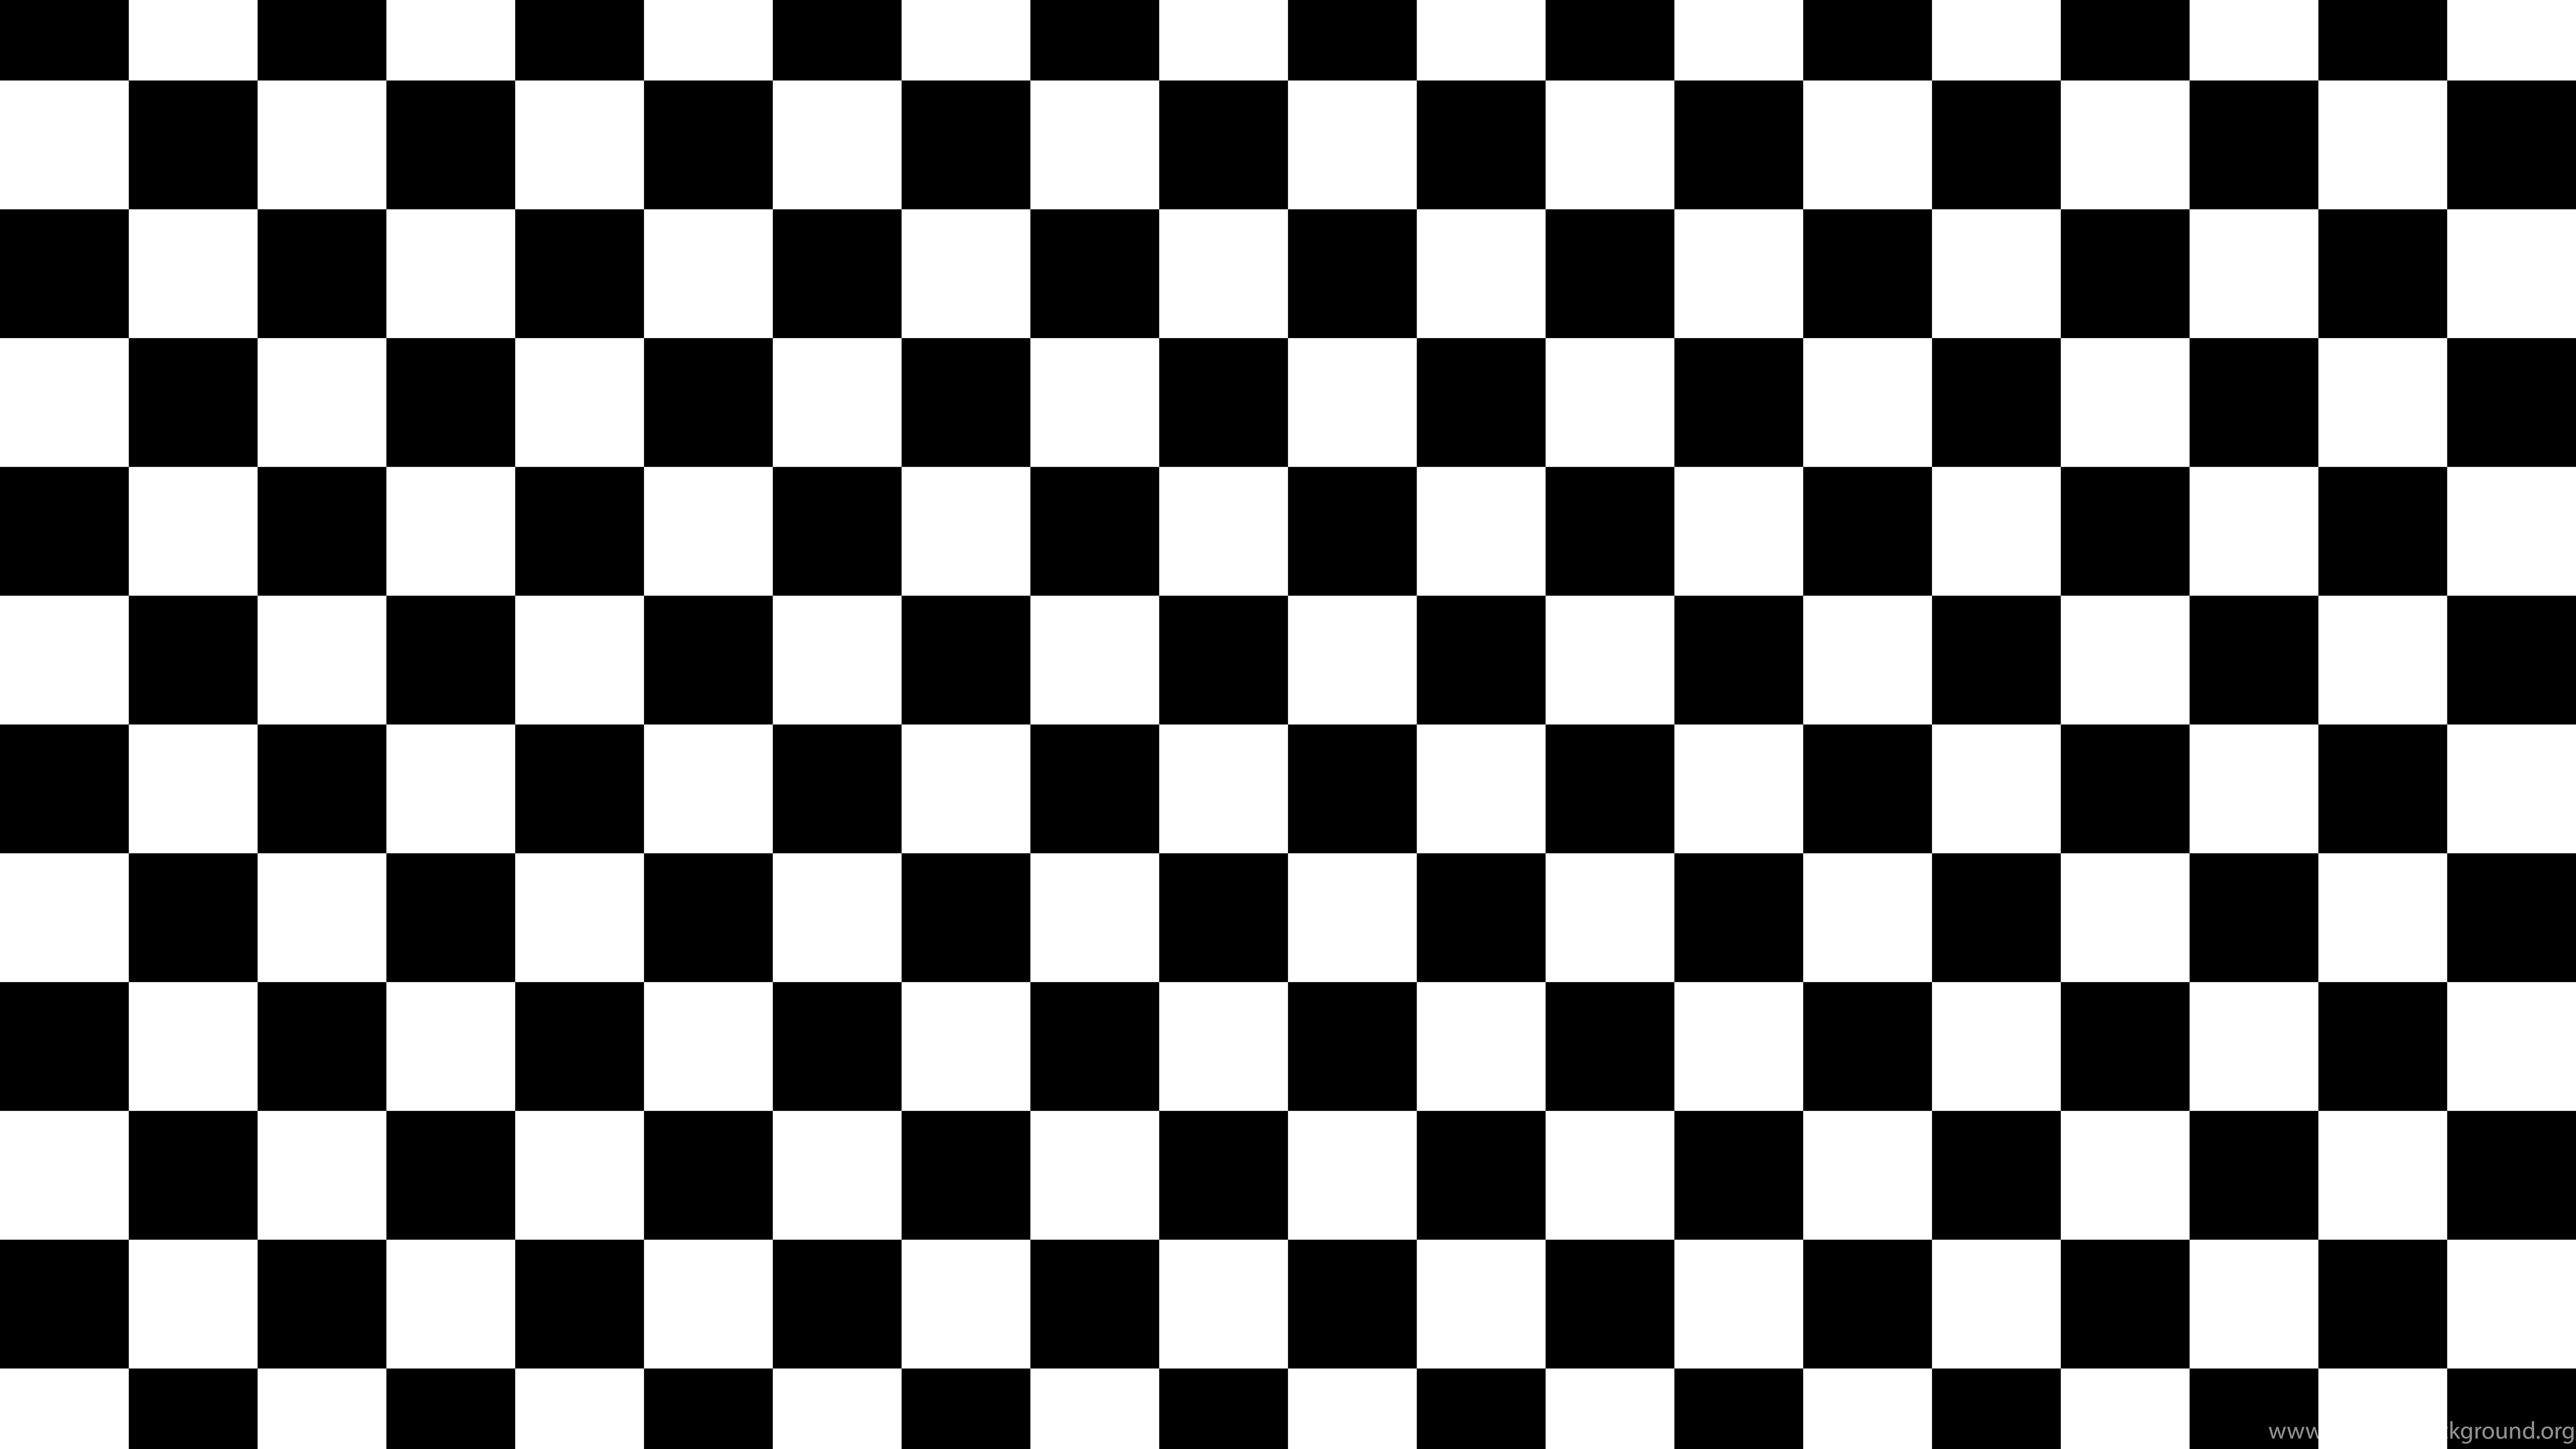 Шахматная доска на экране монитора. Черно белая клетка. Шахматная клетка фон. Черно белая доска для шахмат. Черно белые квадратики.